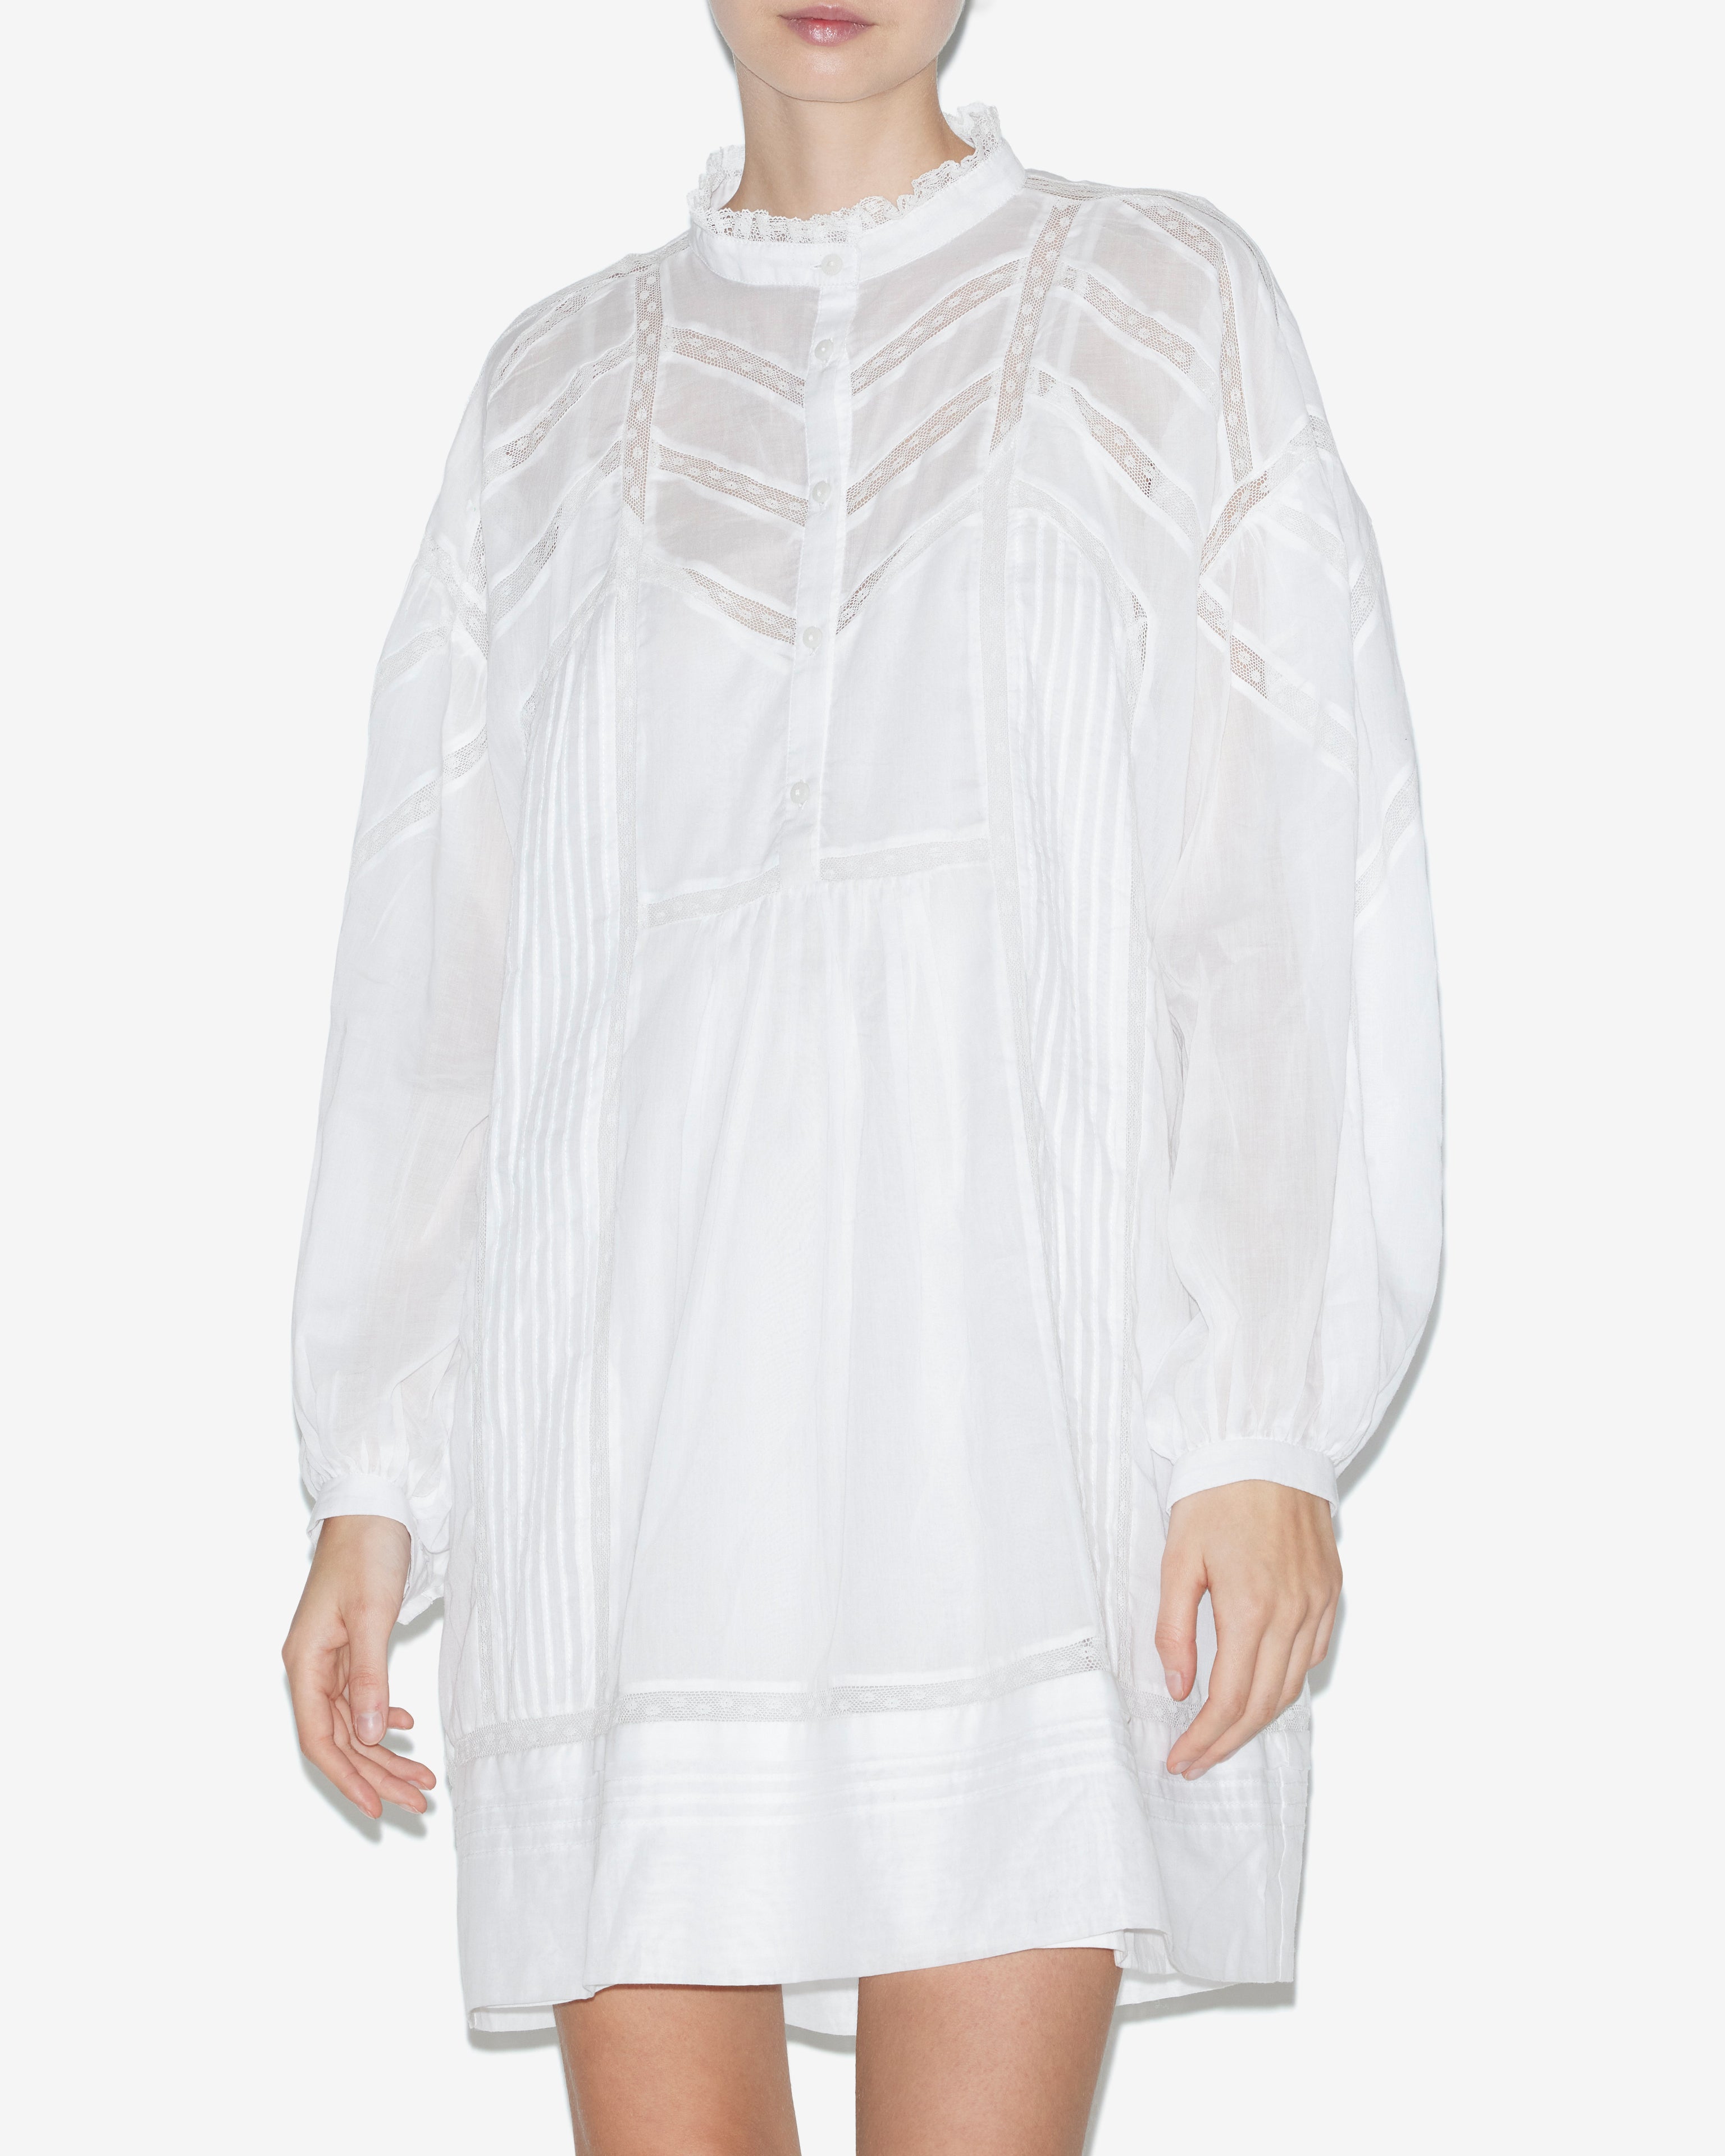 Galia dress Woman White 5